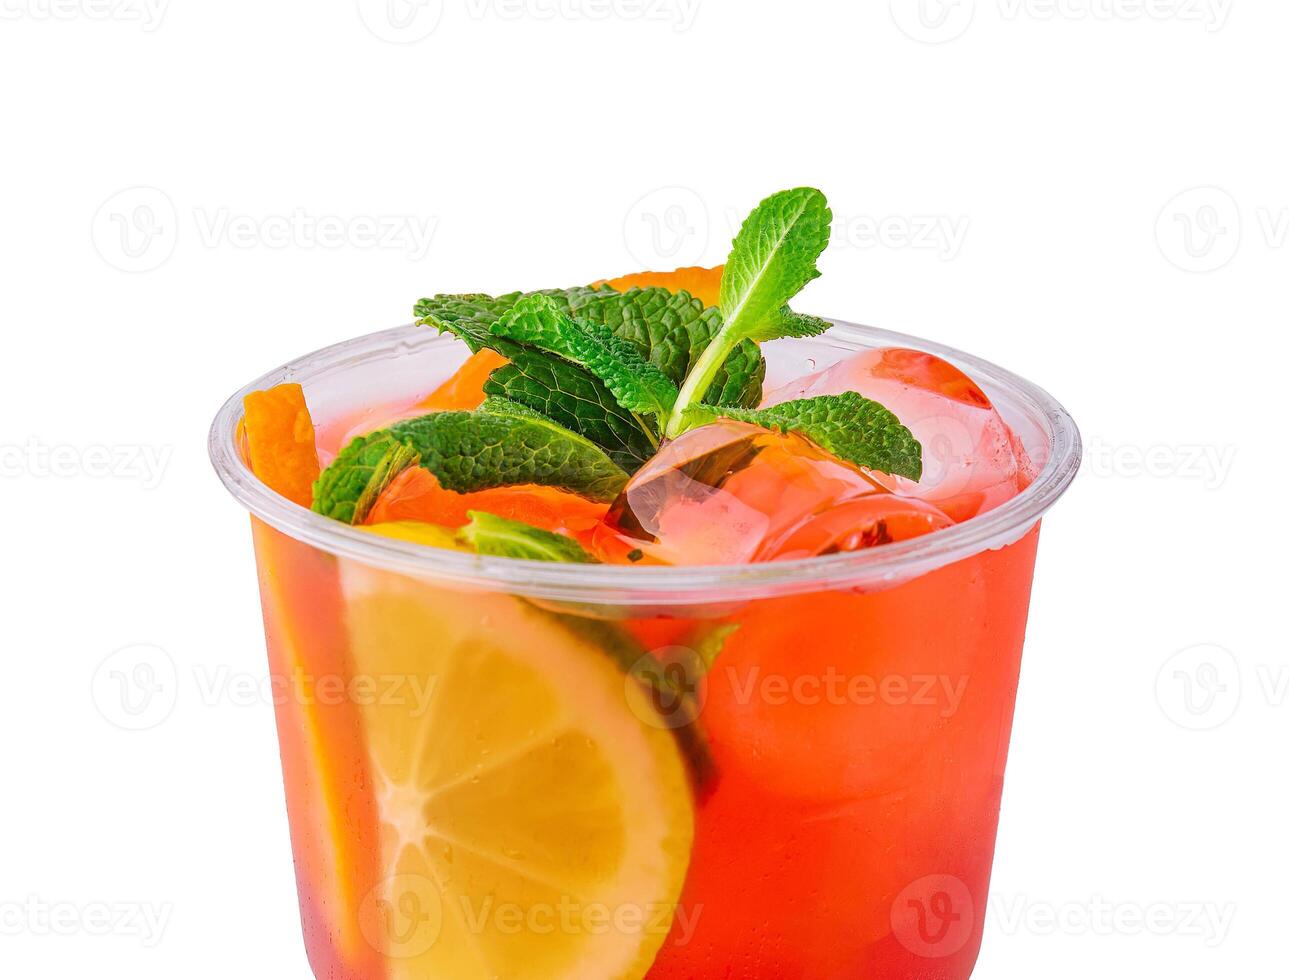 Strawberry Lemonade with Lemon Slices and Mint photo